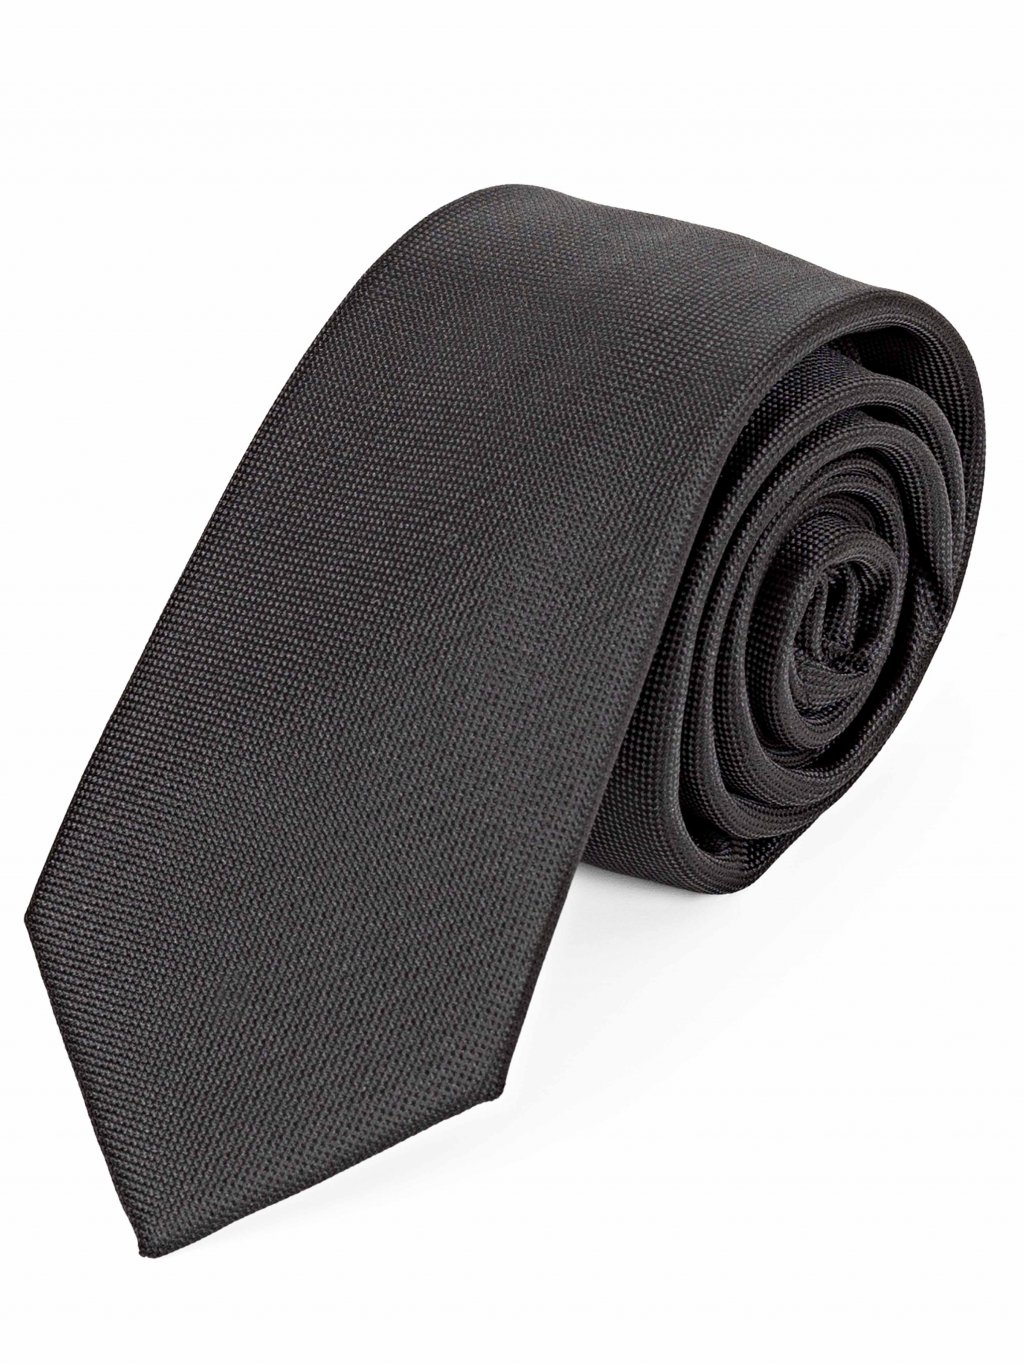 černá kravata Feratt